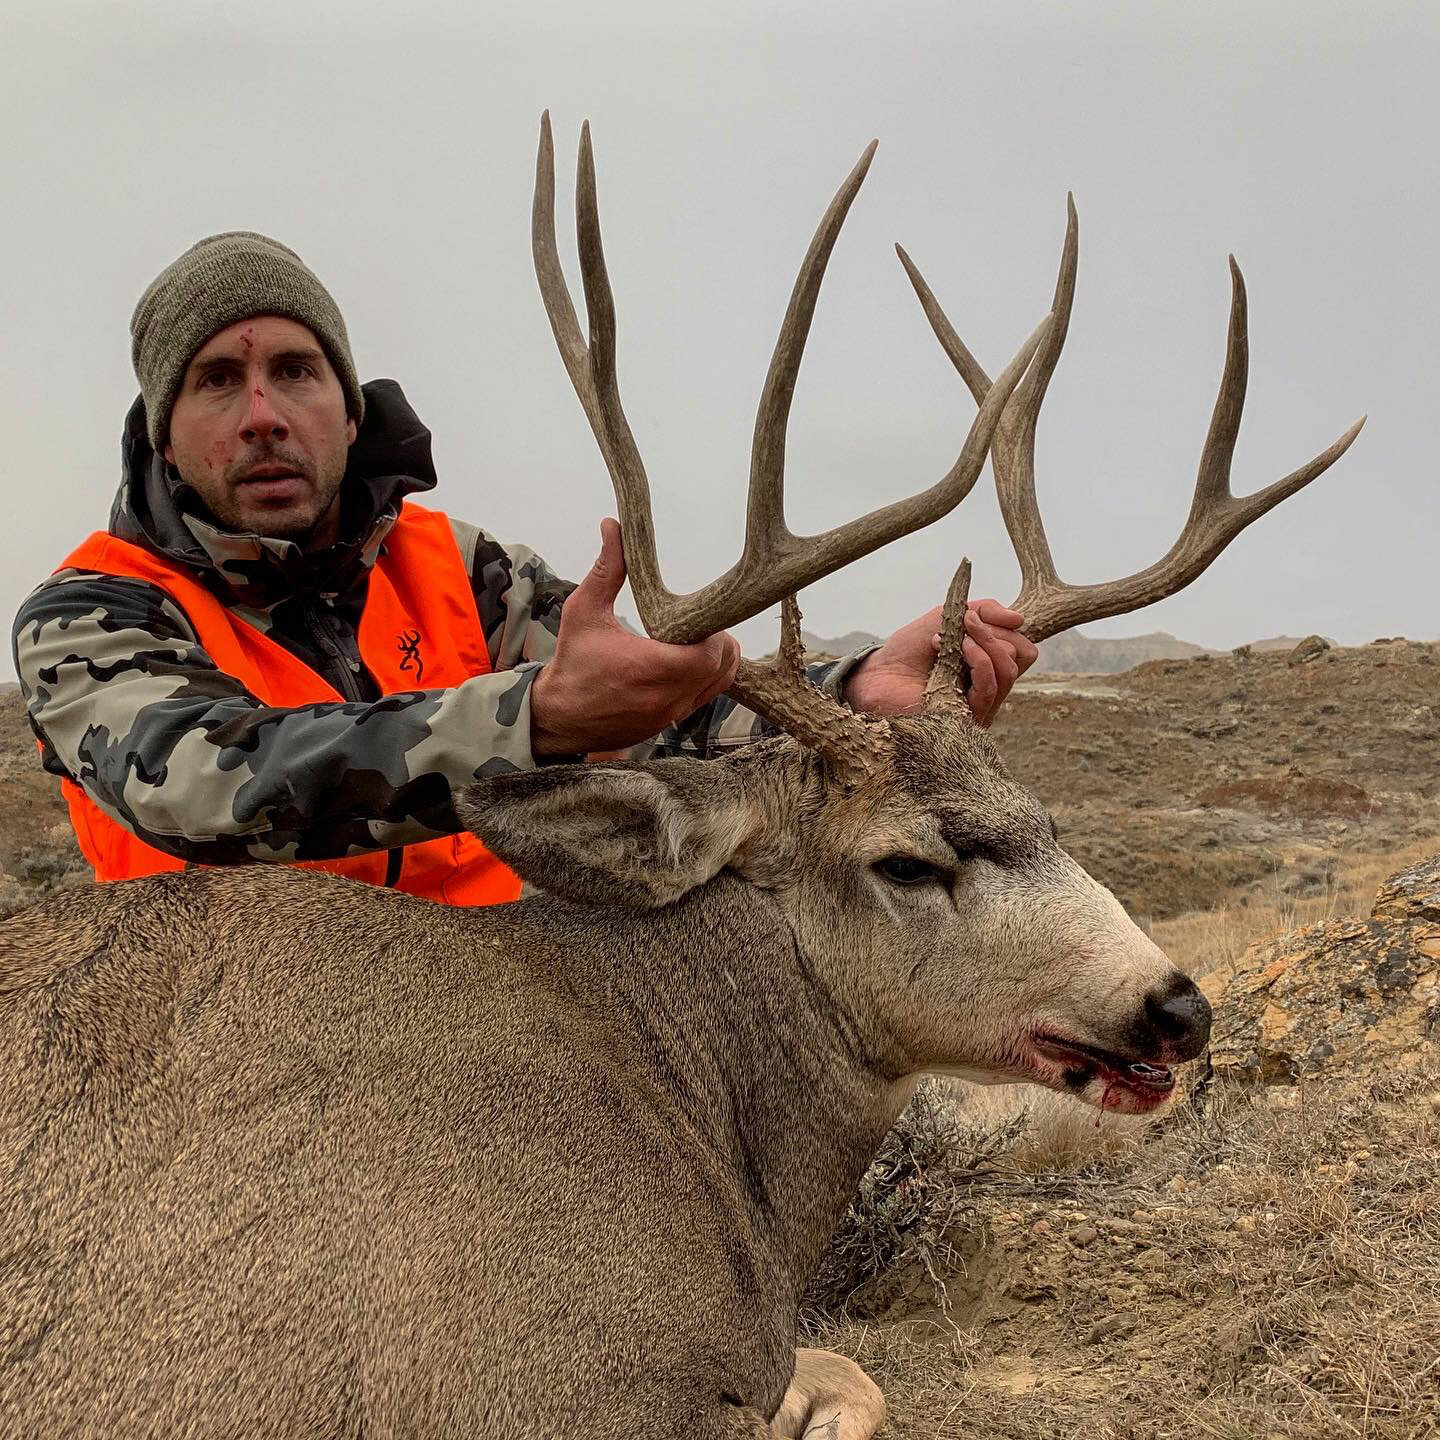 Guided Montana Deer Hunts — Montana Big Game Outfitters